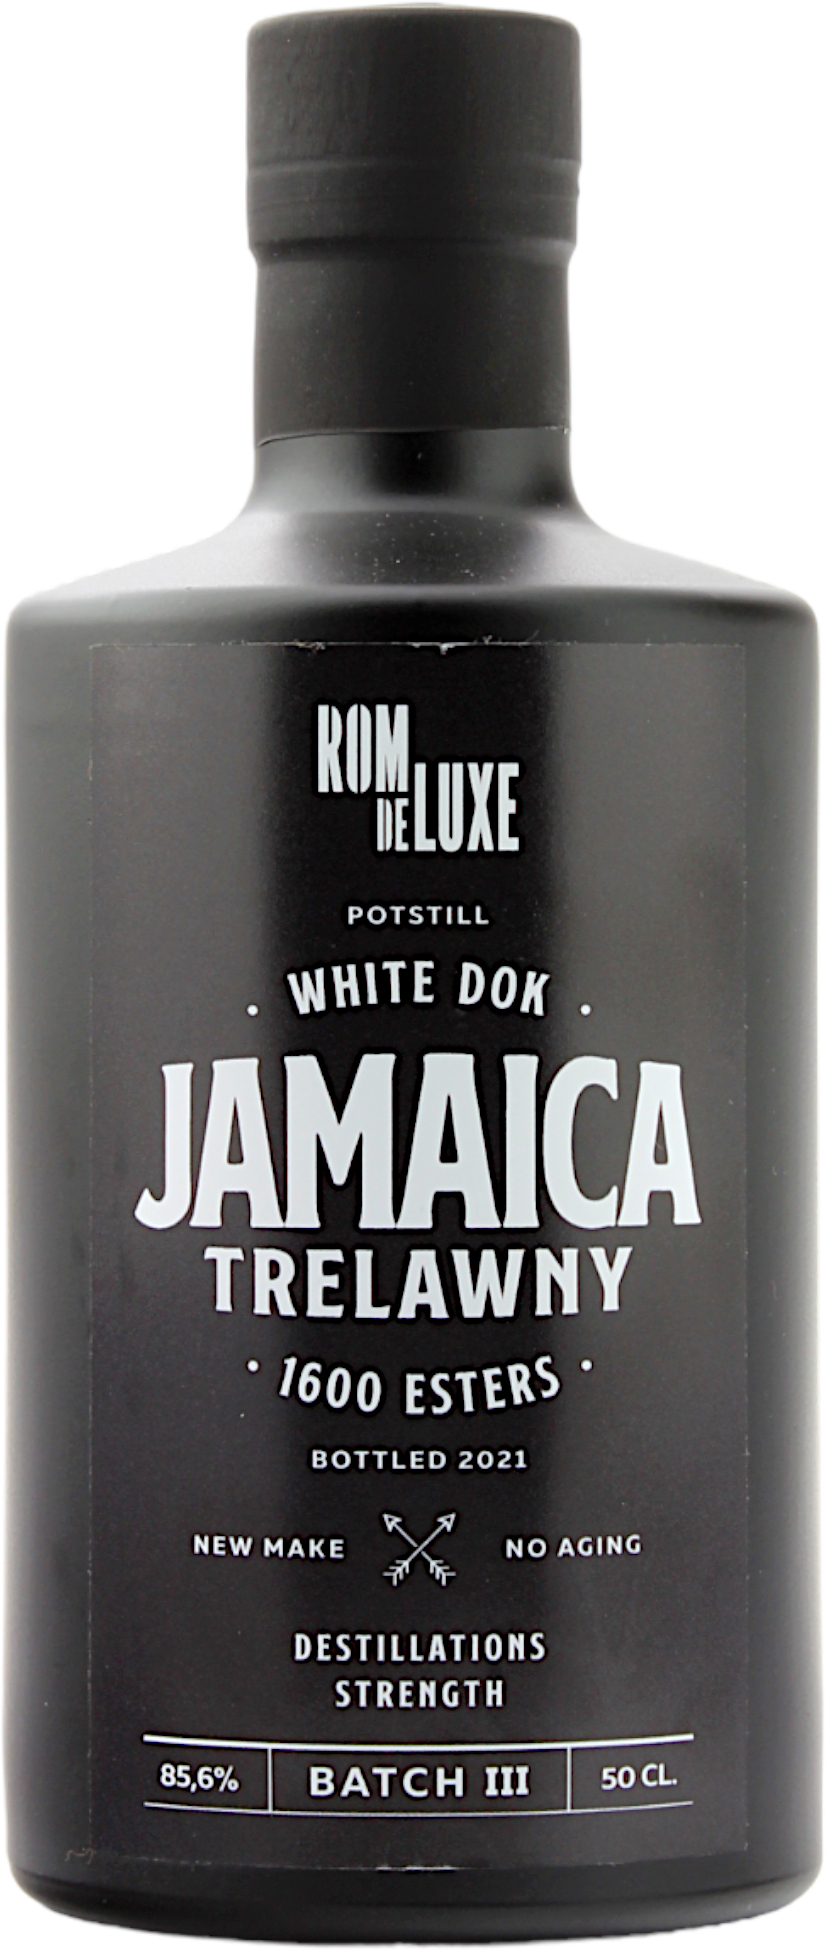 White DOK Jamaica Trelawny Batch III RomDeLuxe 85.6% 0,5l